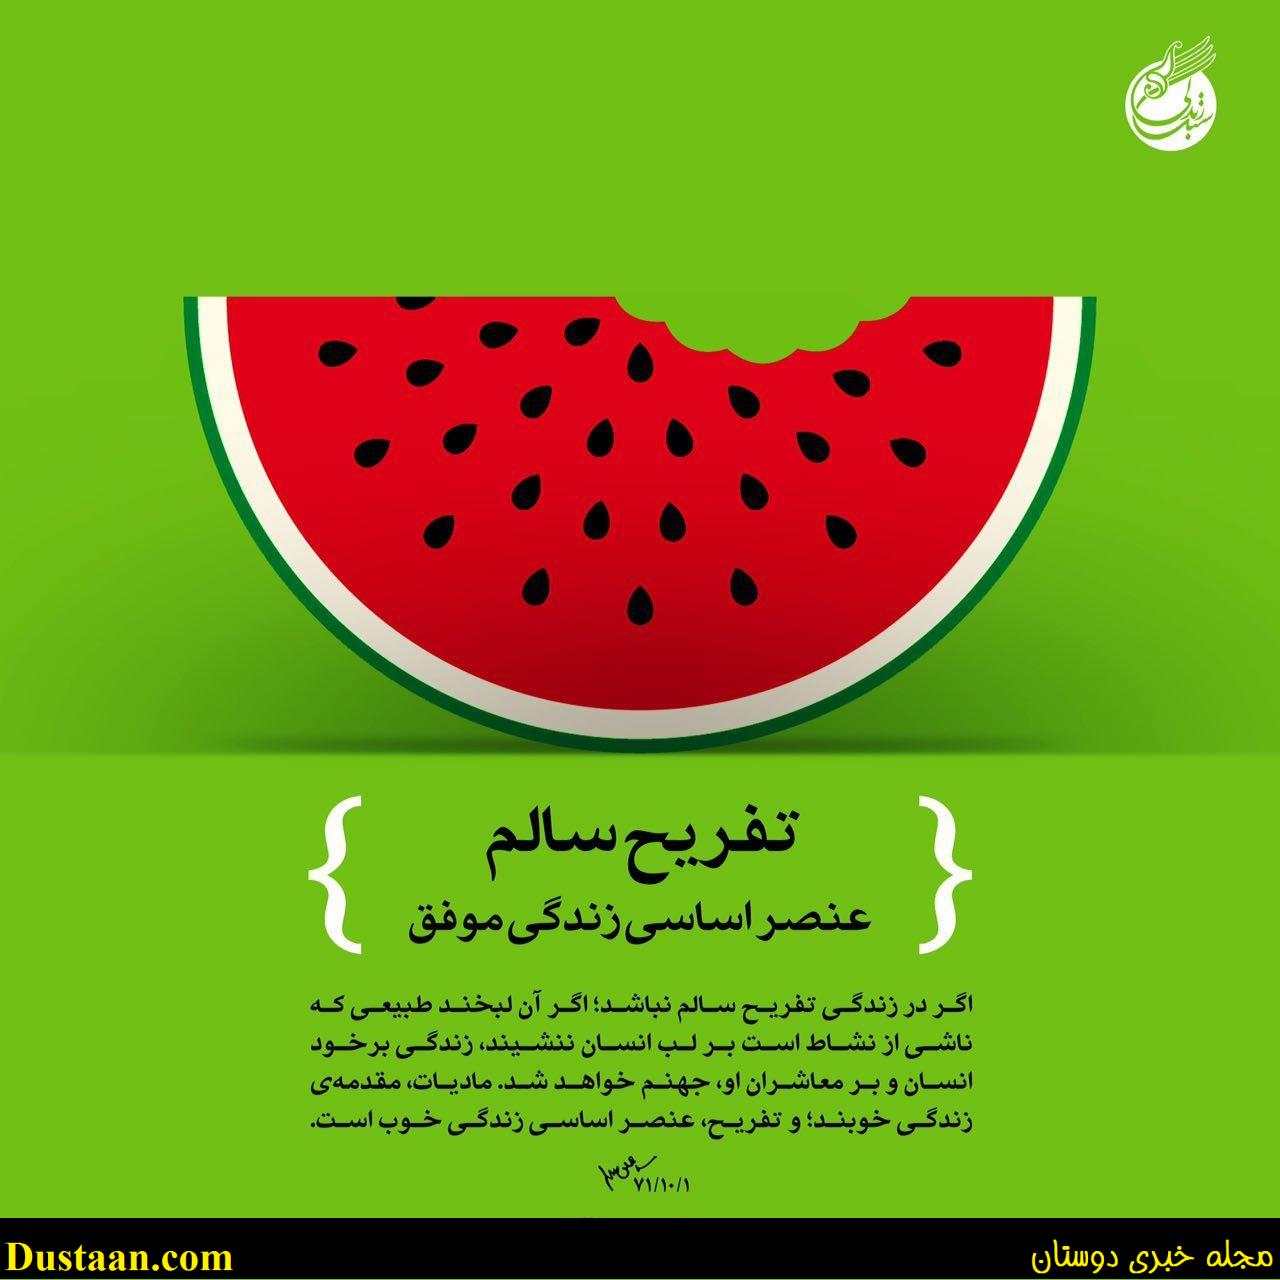 www.dustaan.com-طرحی که کانال تلگرامی رهبری در شب یلدا منتشر کرد